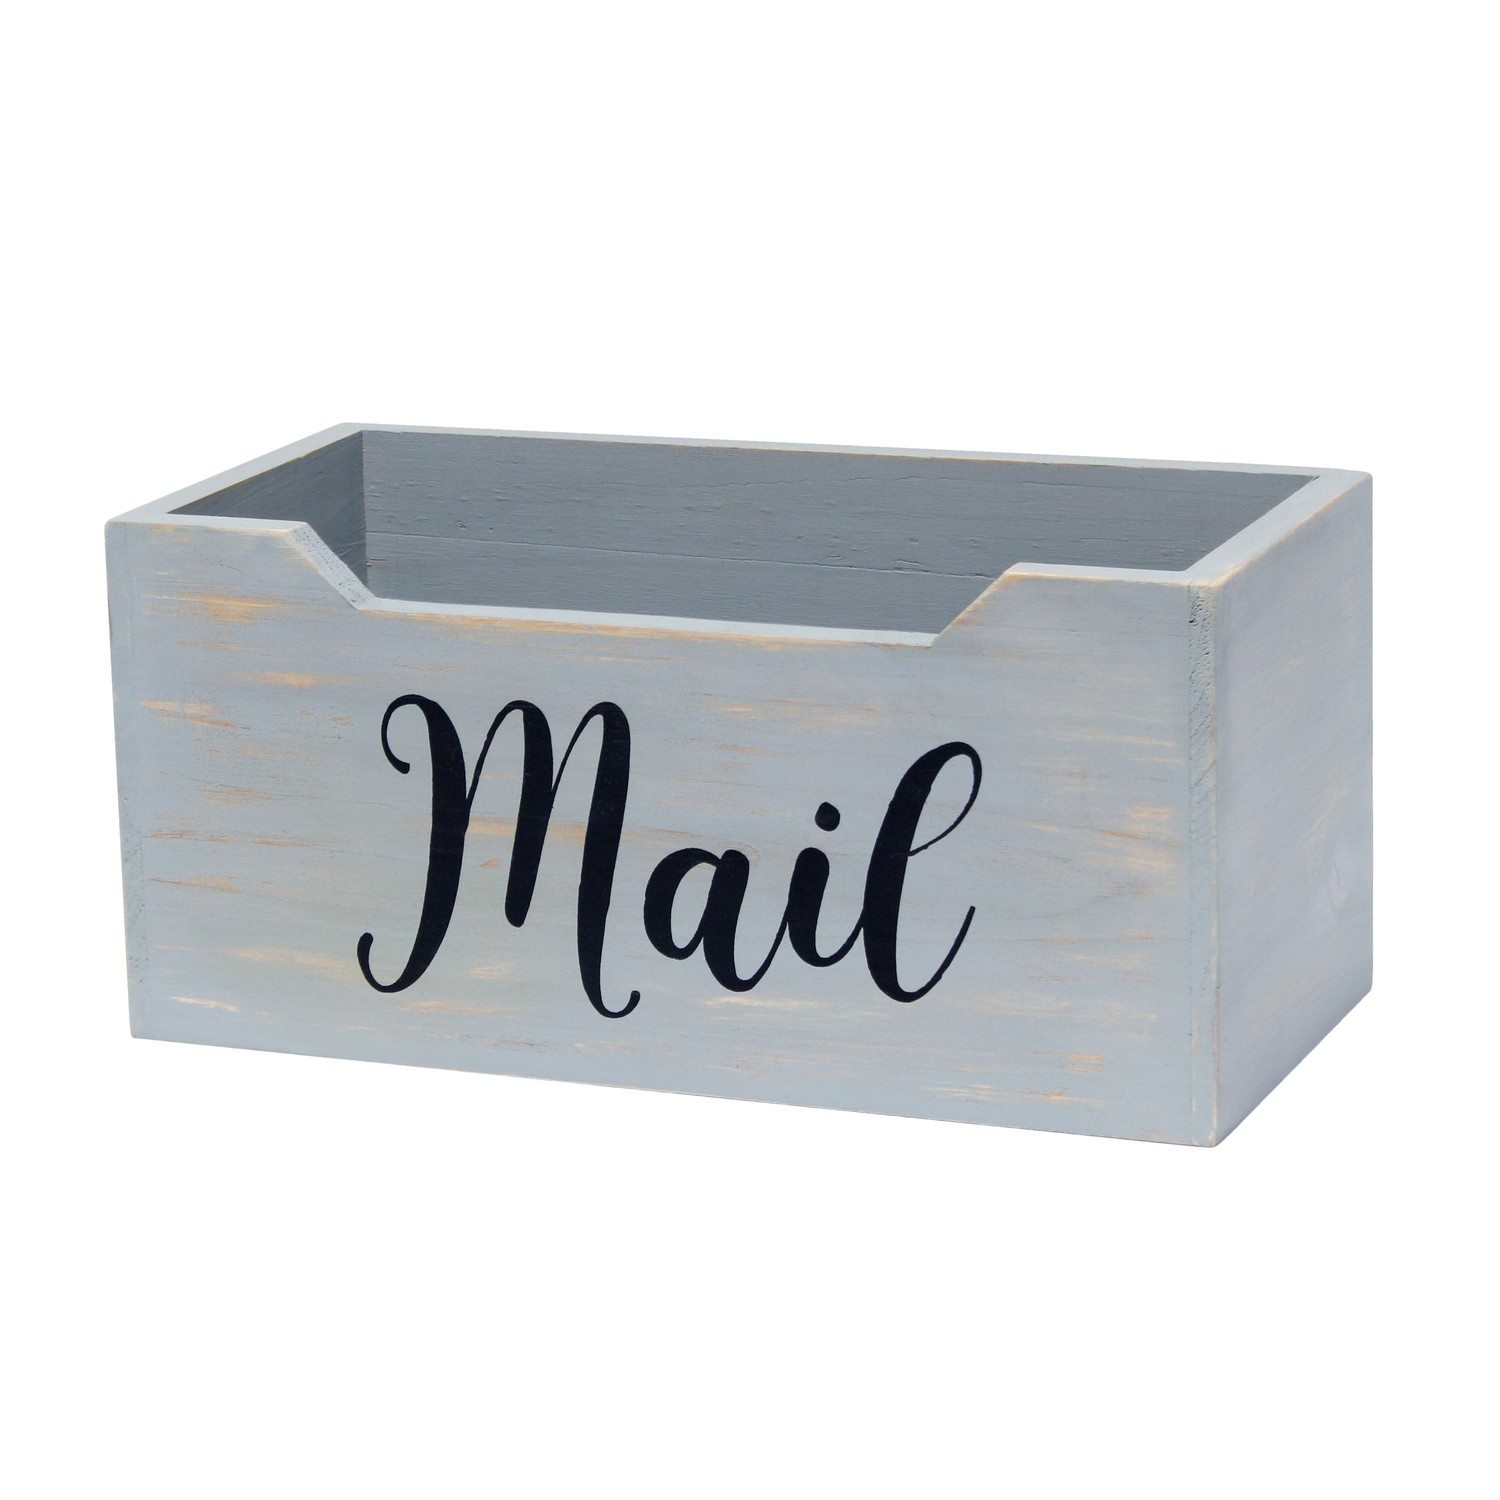 Elegant Designs Rustic Farmhouse Wooden Tabletop Decorative Script Word "Mail" Organizer Box, Letter Holder, Gray Wash